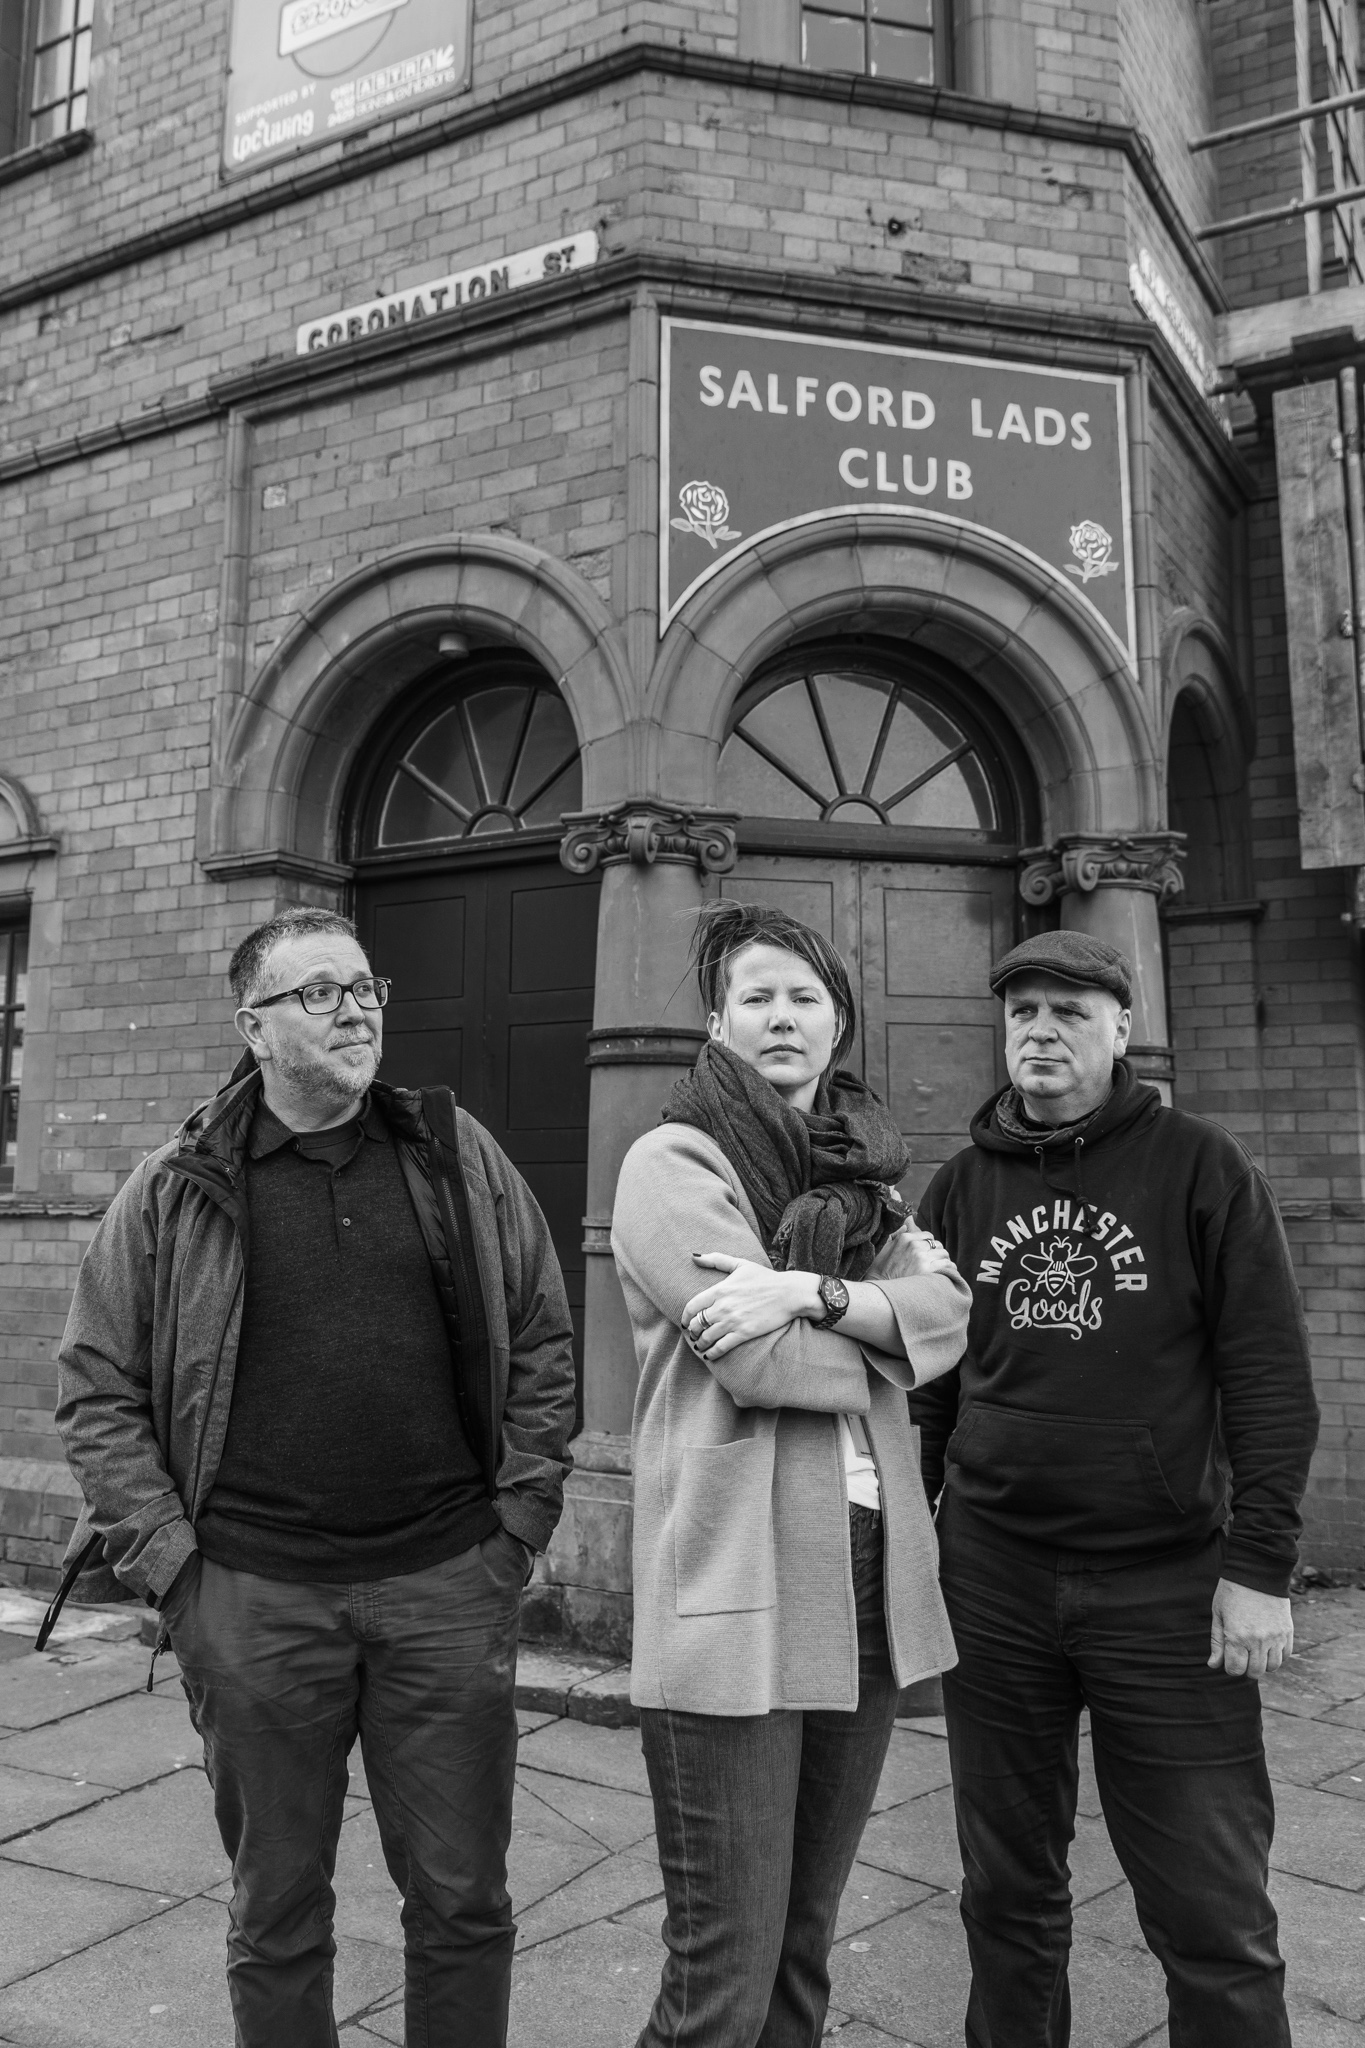 Salford Lads Club, as made famous by The Smiths // 11 INSTAGRAM-WORTHY PHOTO SPOTS IN MANCHESTER, ENGLAND // www.readysetjetset.net #readysetjetset #manchester #england #uk #unitedkingdom #cityguide #travel